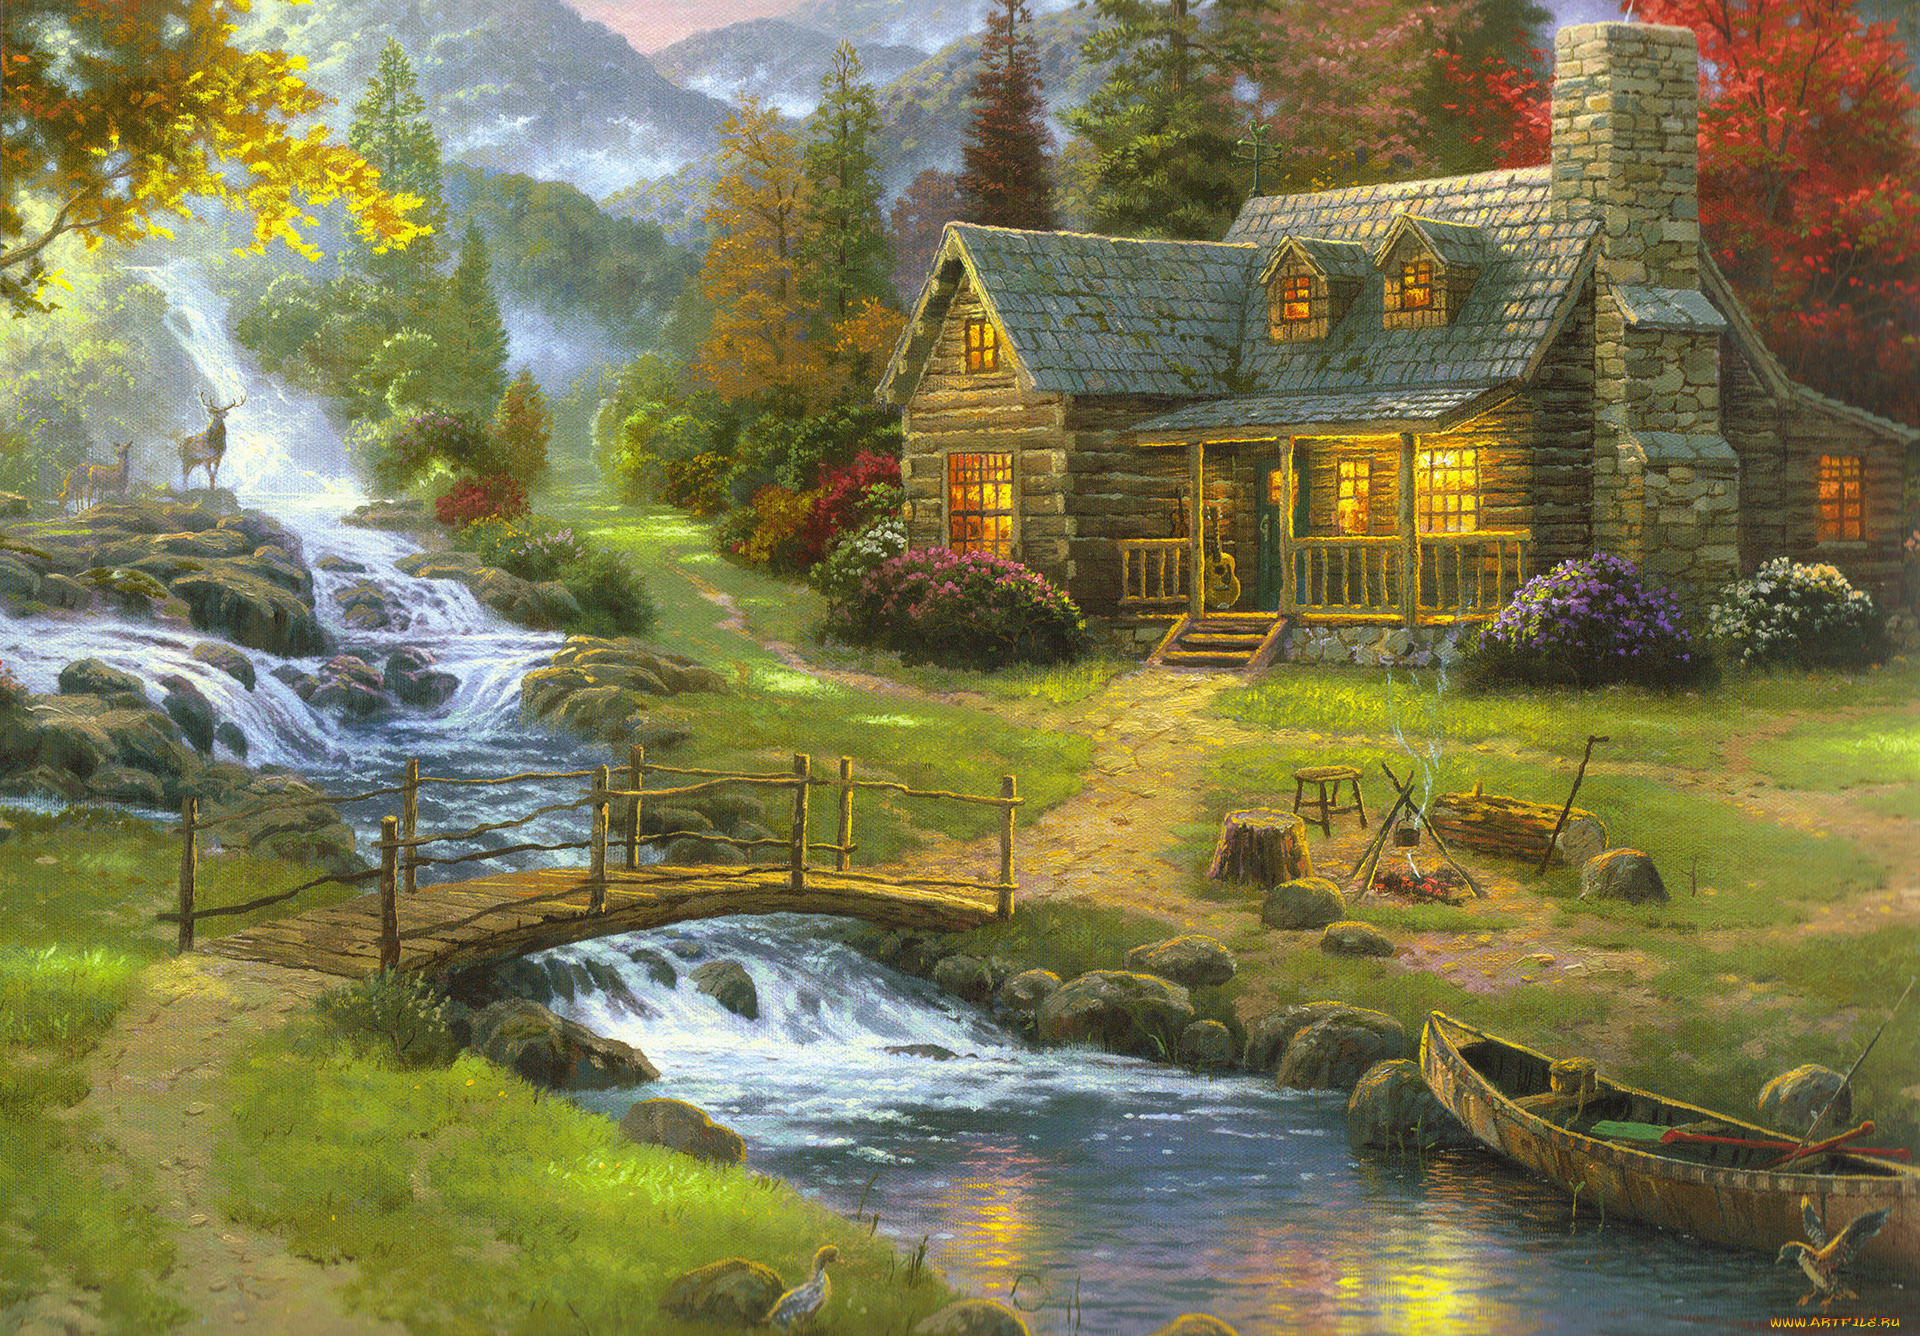 рисованное, живопись, лес, речка, домик, олени, лодка, мостик, река, труба, свет